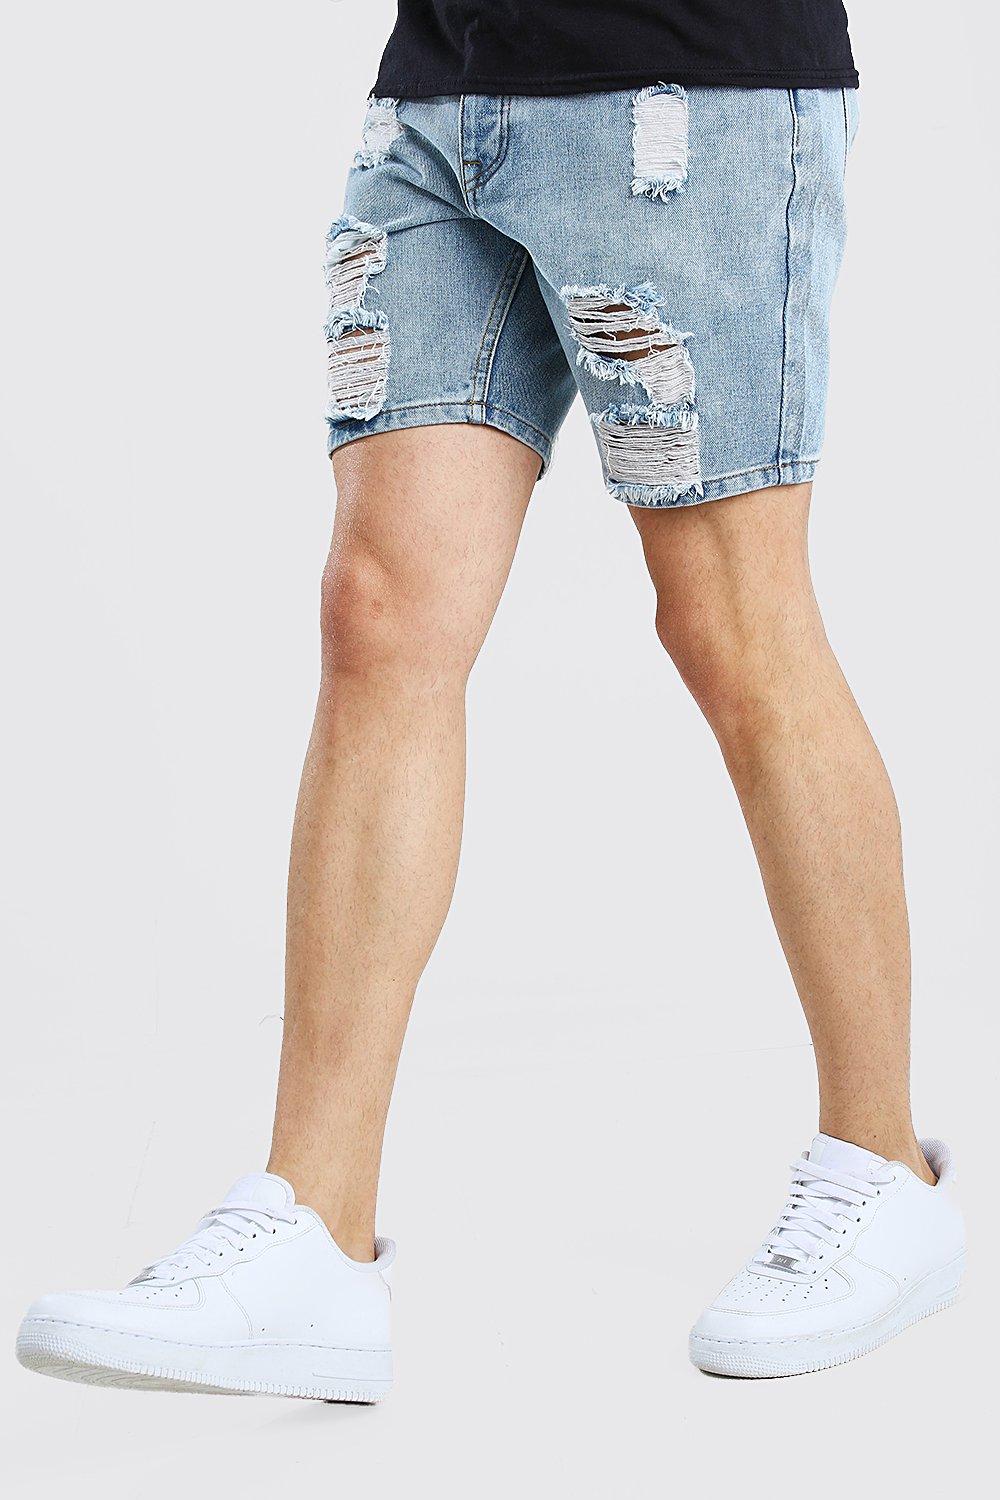 destroyed jean shorts mens